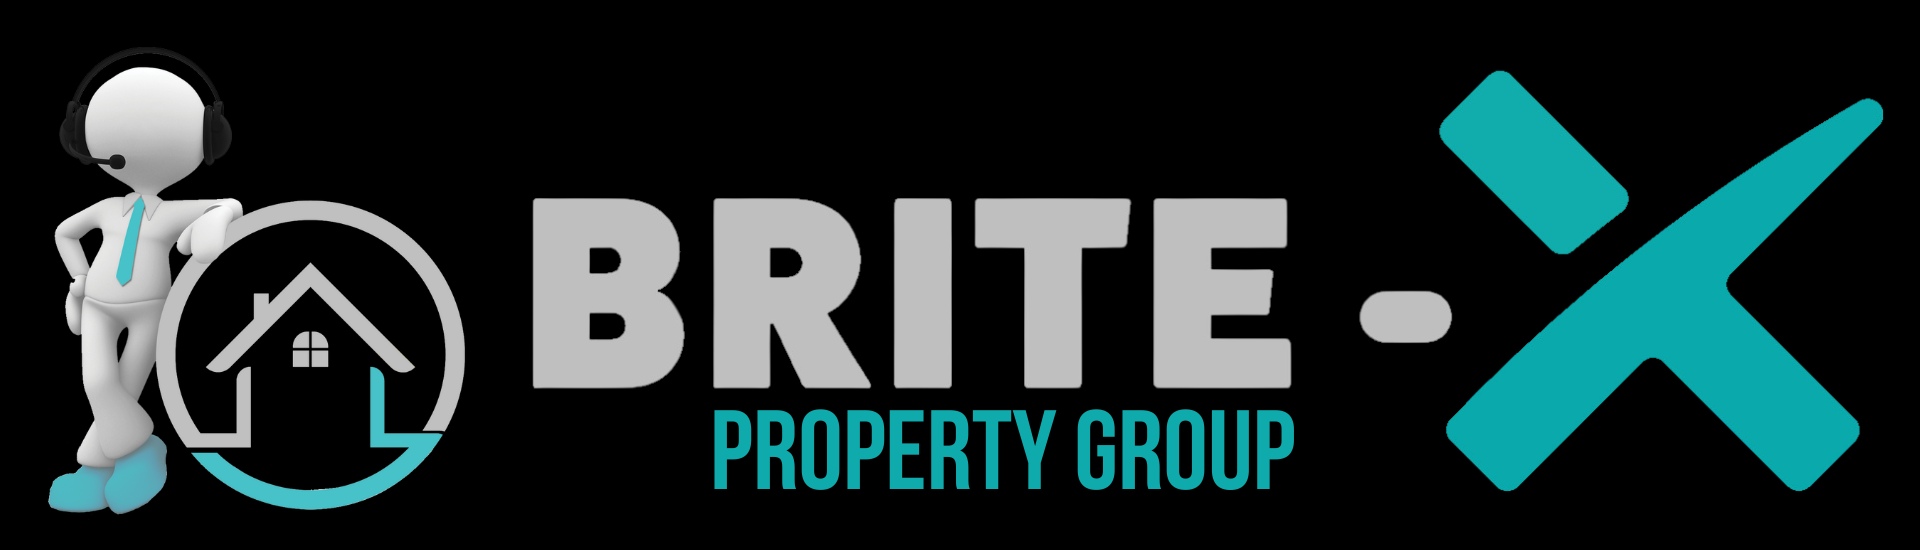 12 - Real Estate Agent Gauteng - BRITE-X Property Group